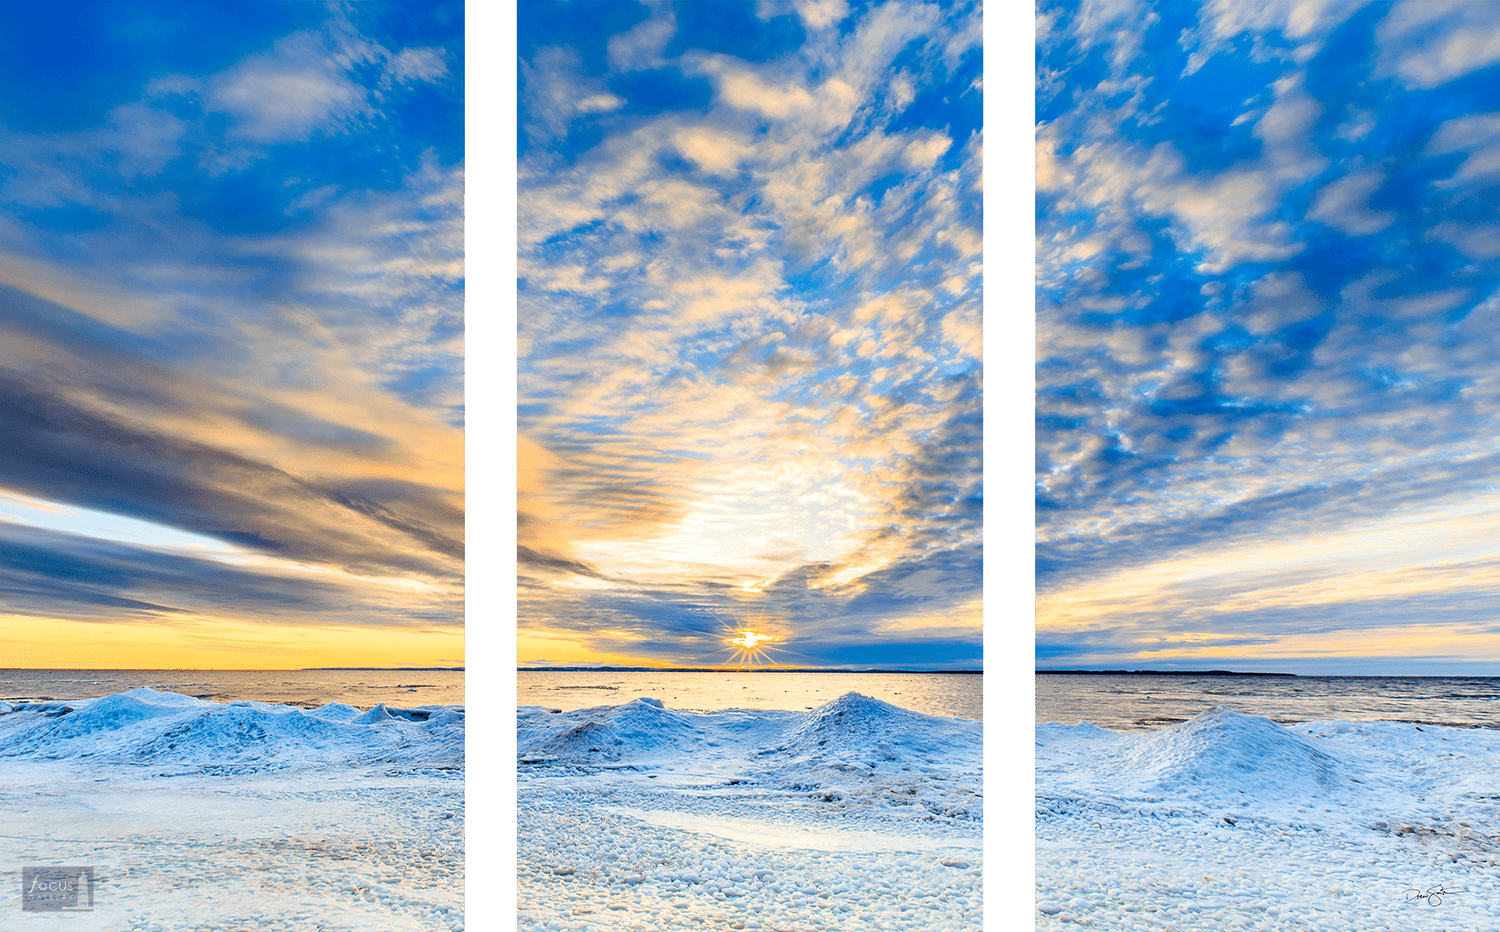 Winter sunset over icy shoreline of Lake Michigan.